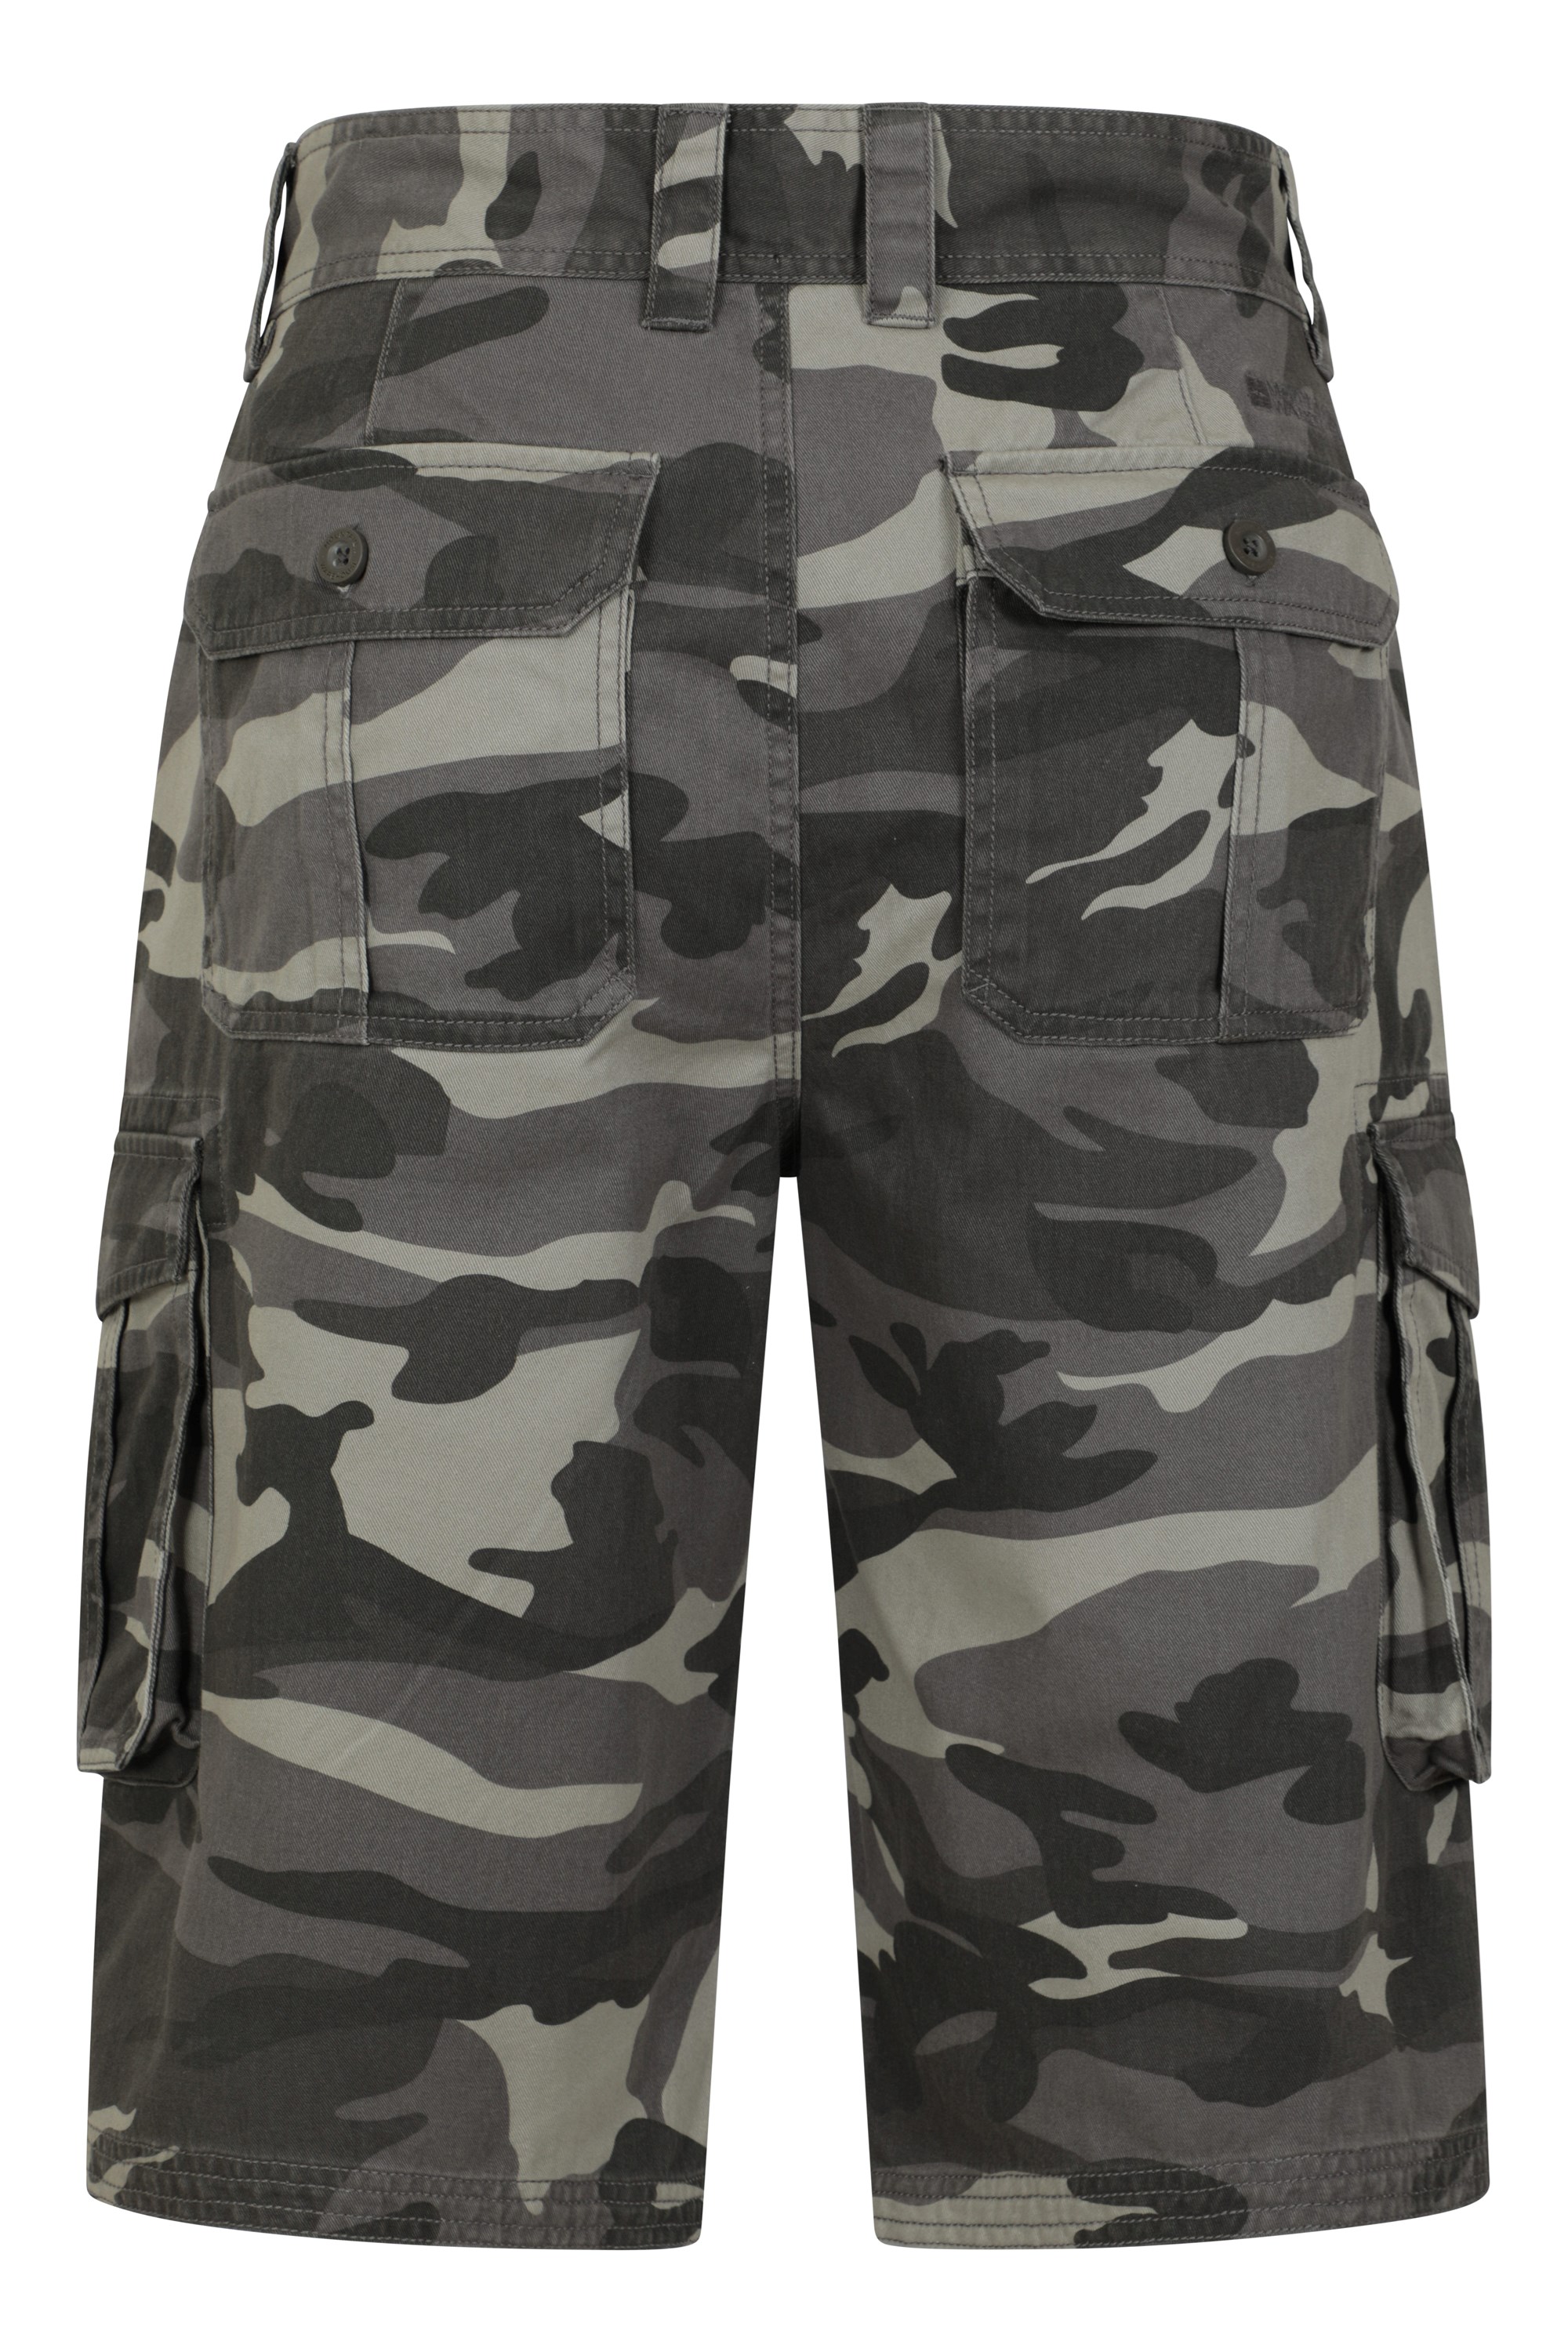 Mountain Warehouse Mens Camo Cargo Shorts - Black | Size W36